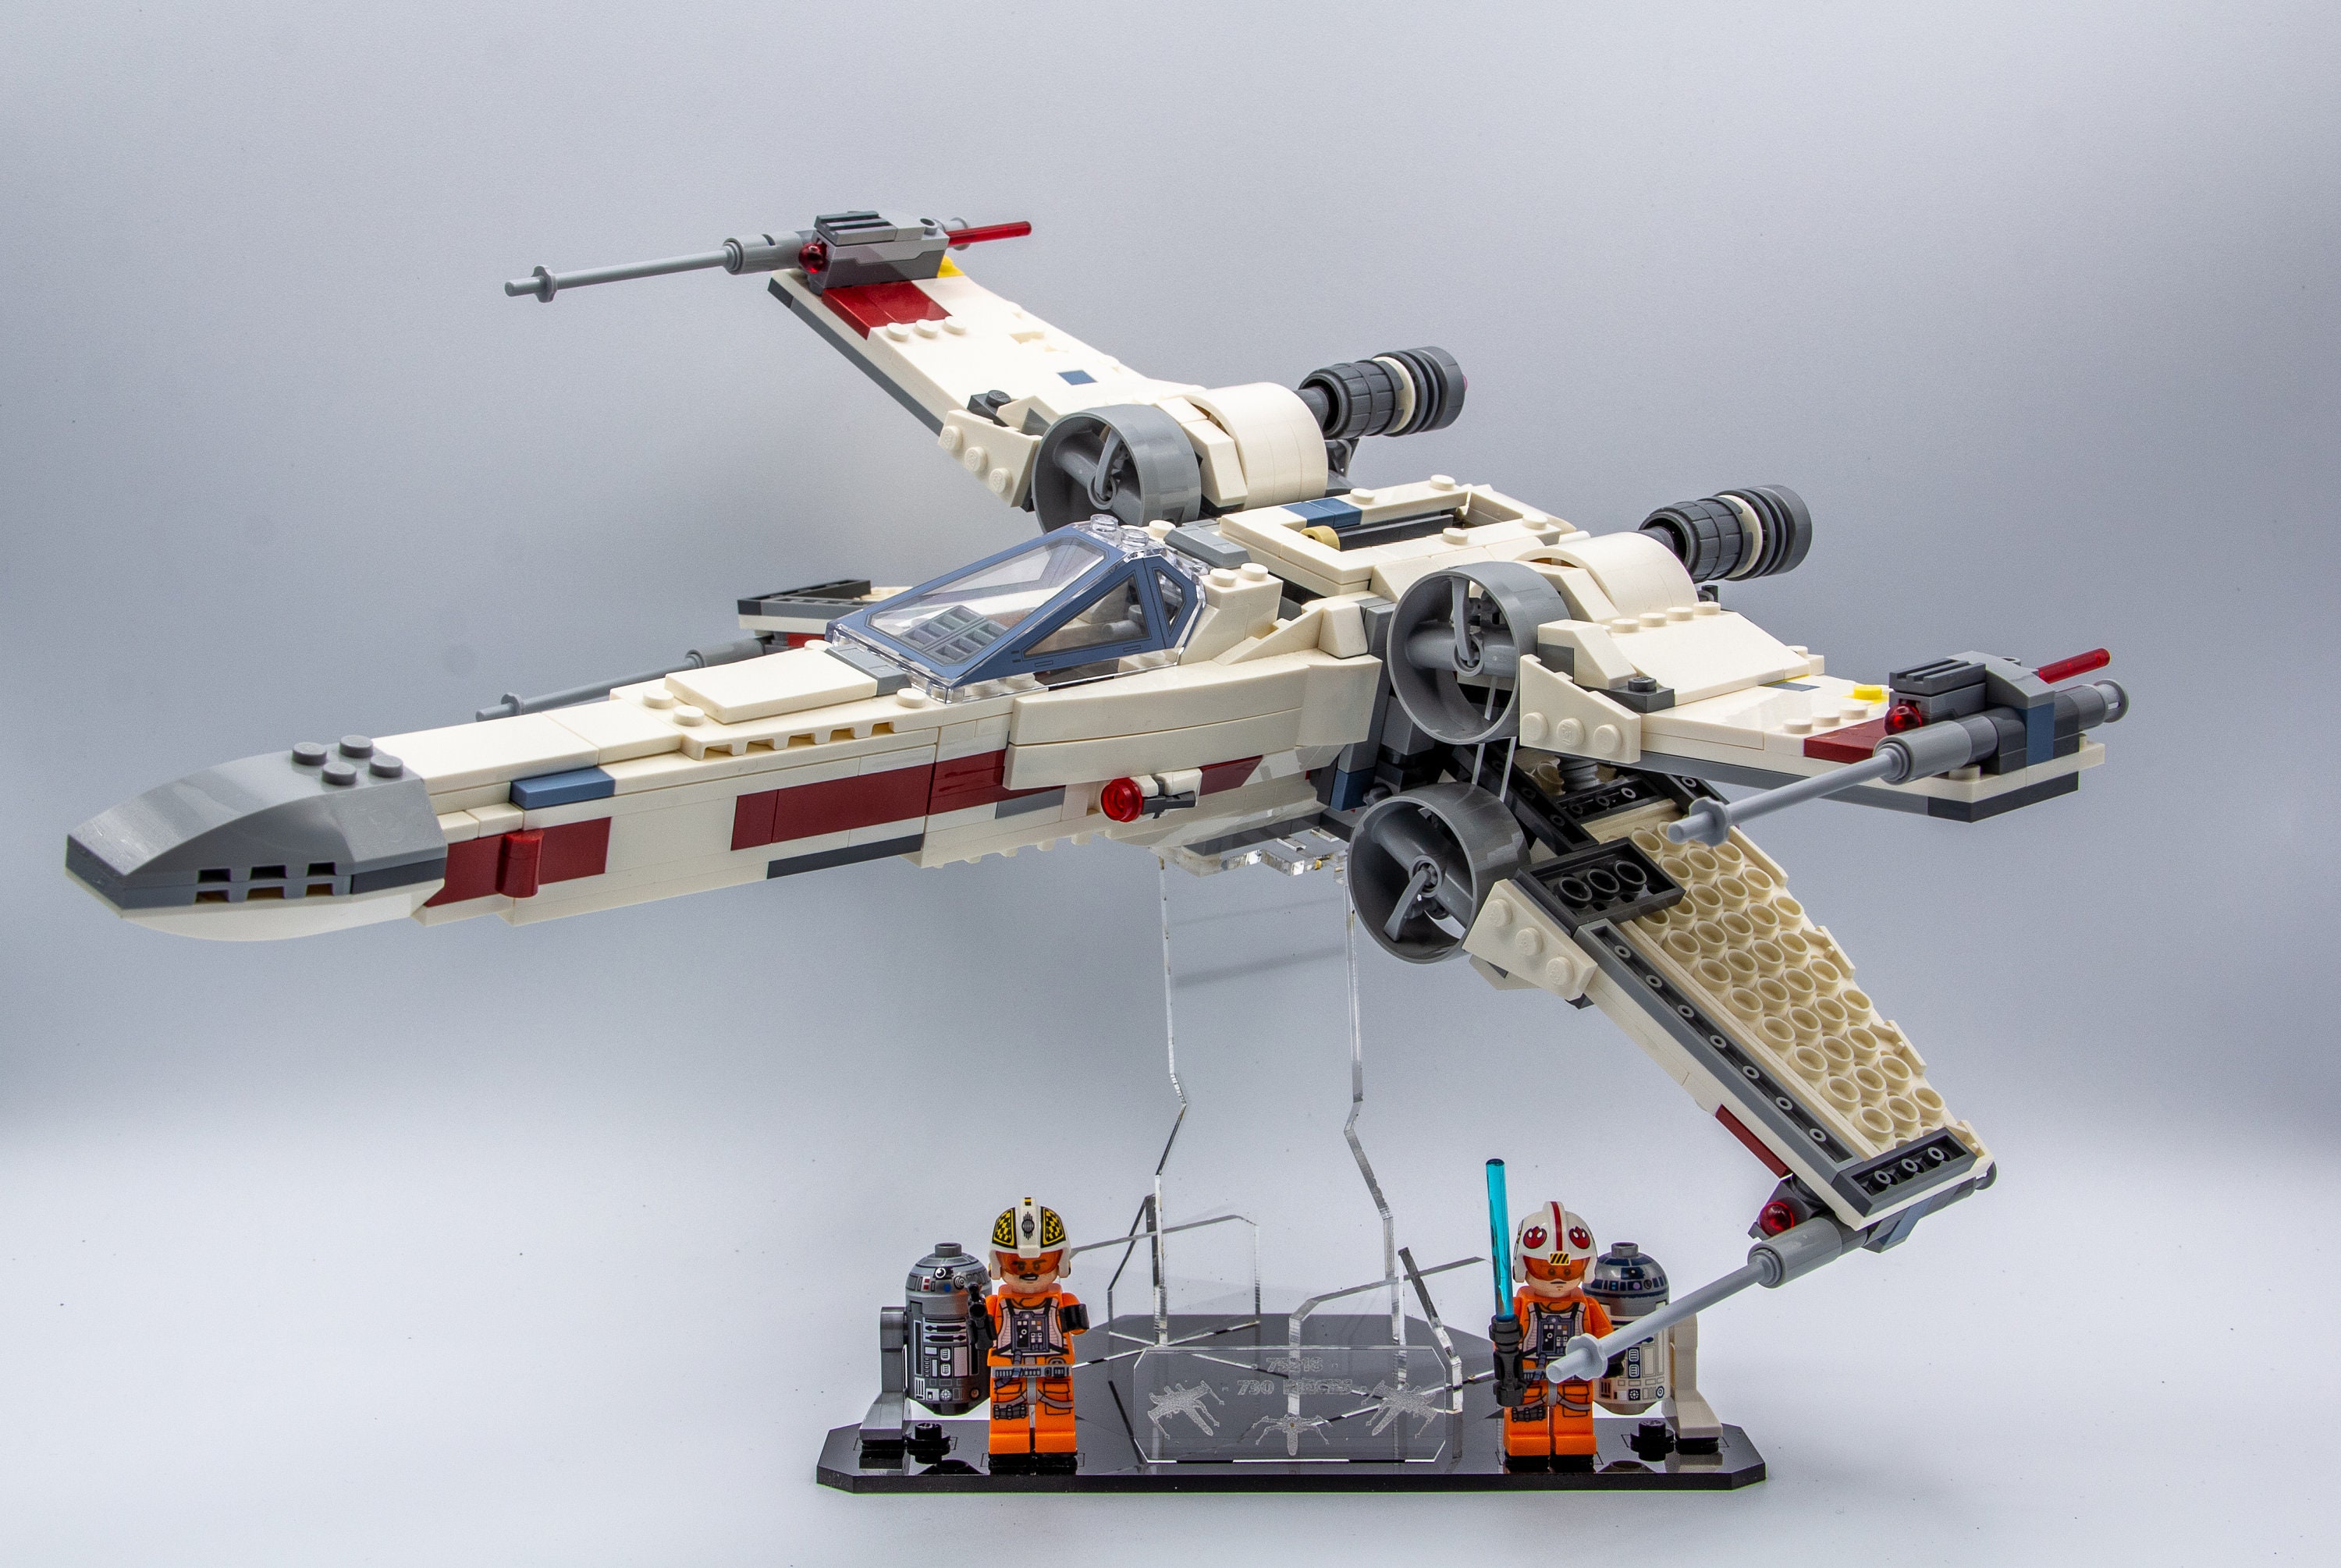 LEGO Star Wars X-Wing Starfighter 75218 Building Set